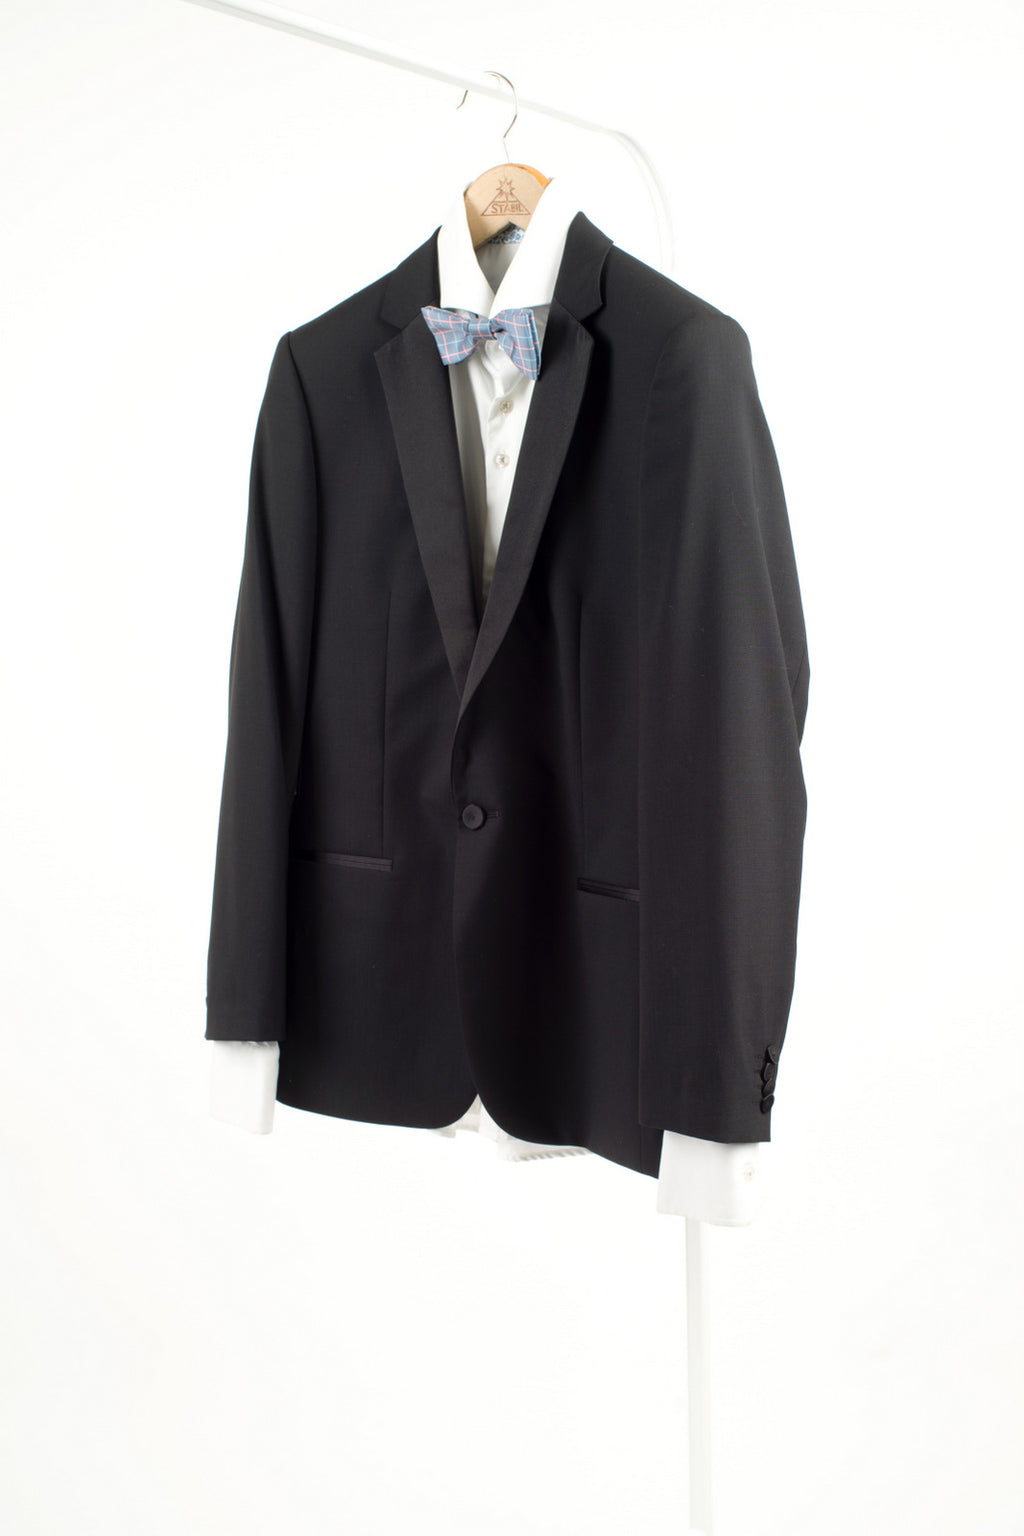 Hugo Boss Black Wool Slim Fit Tuxedo Jacket, US 38R, EU 48